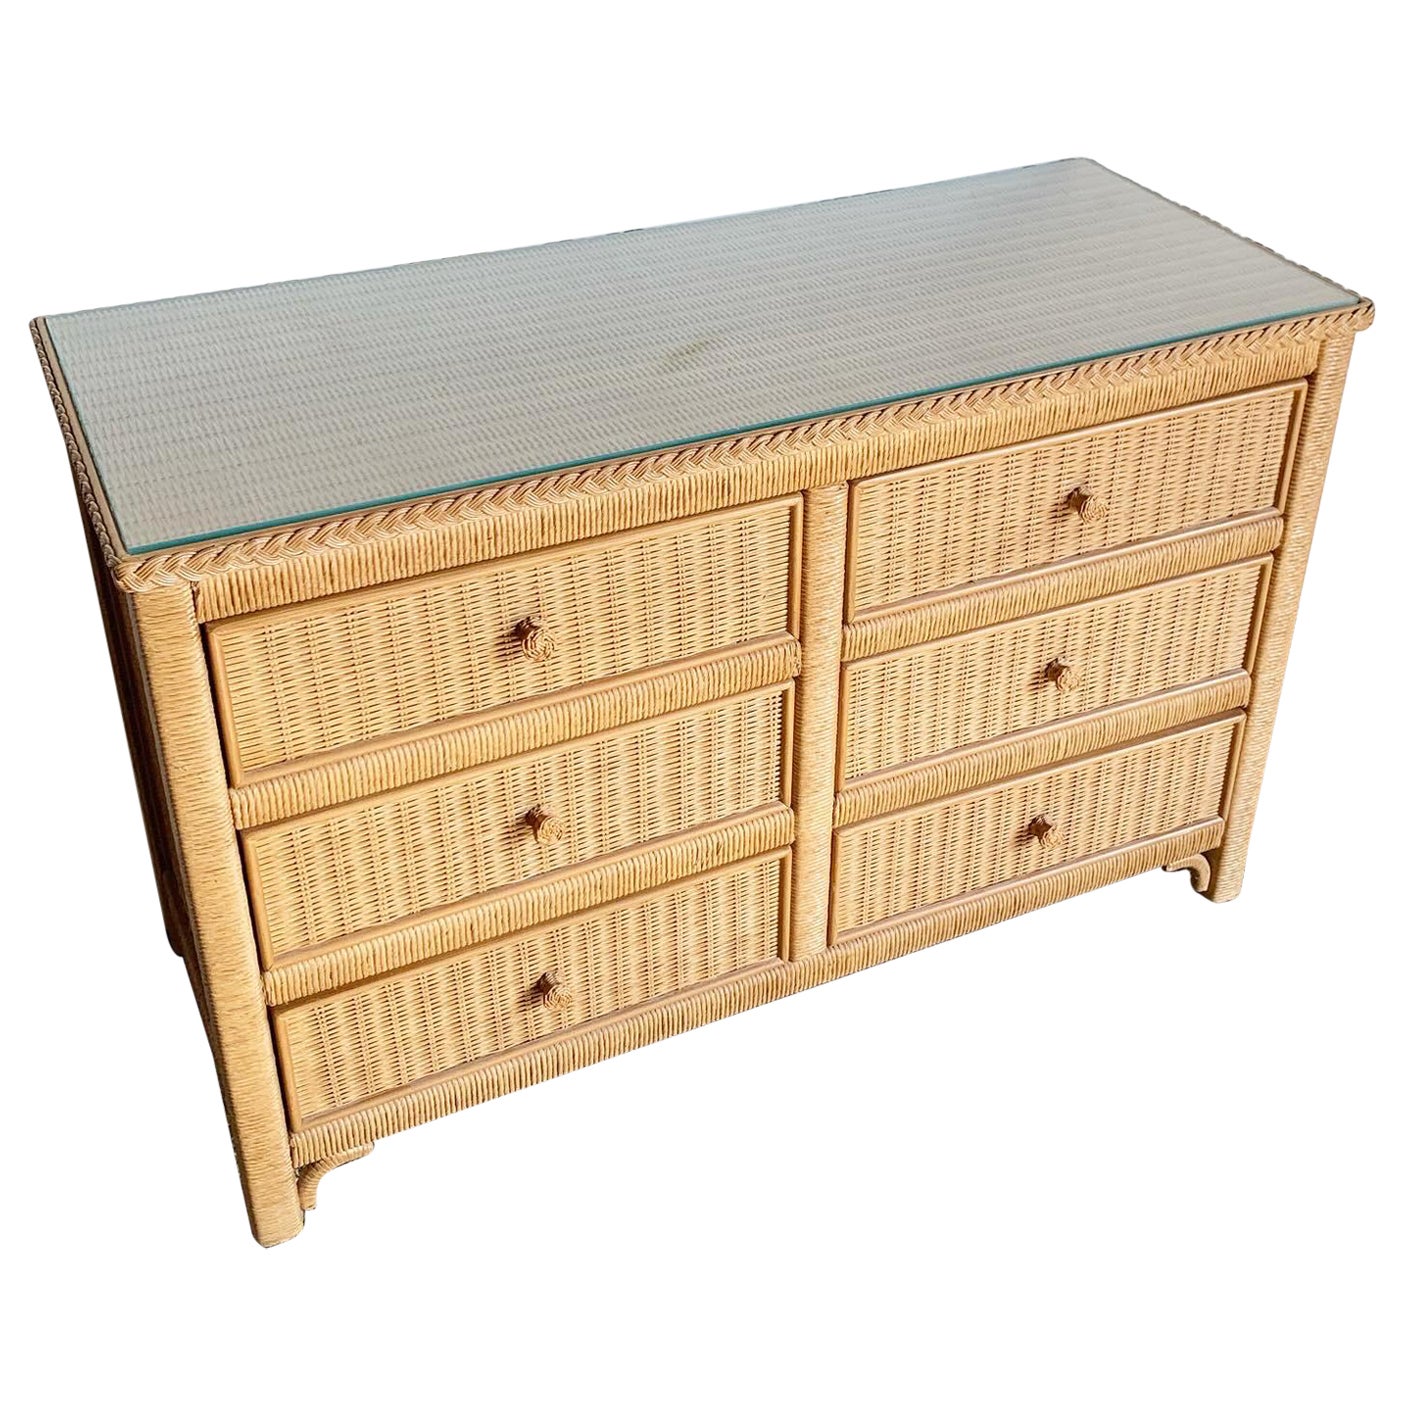 Boho Chic Wicker Rattan Henry Link Dresser by Lexington - 6 Drawer For Sale